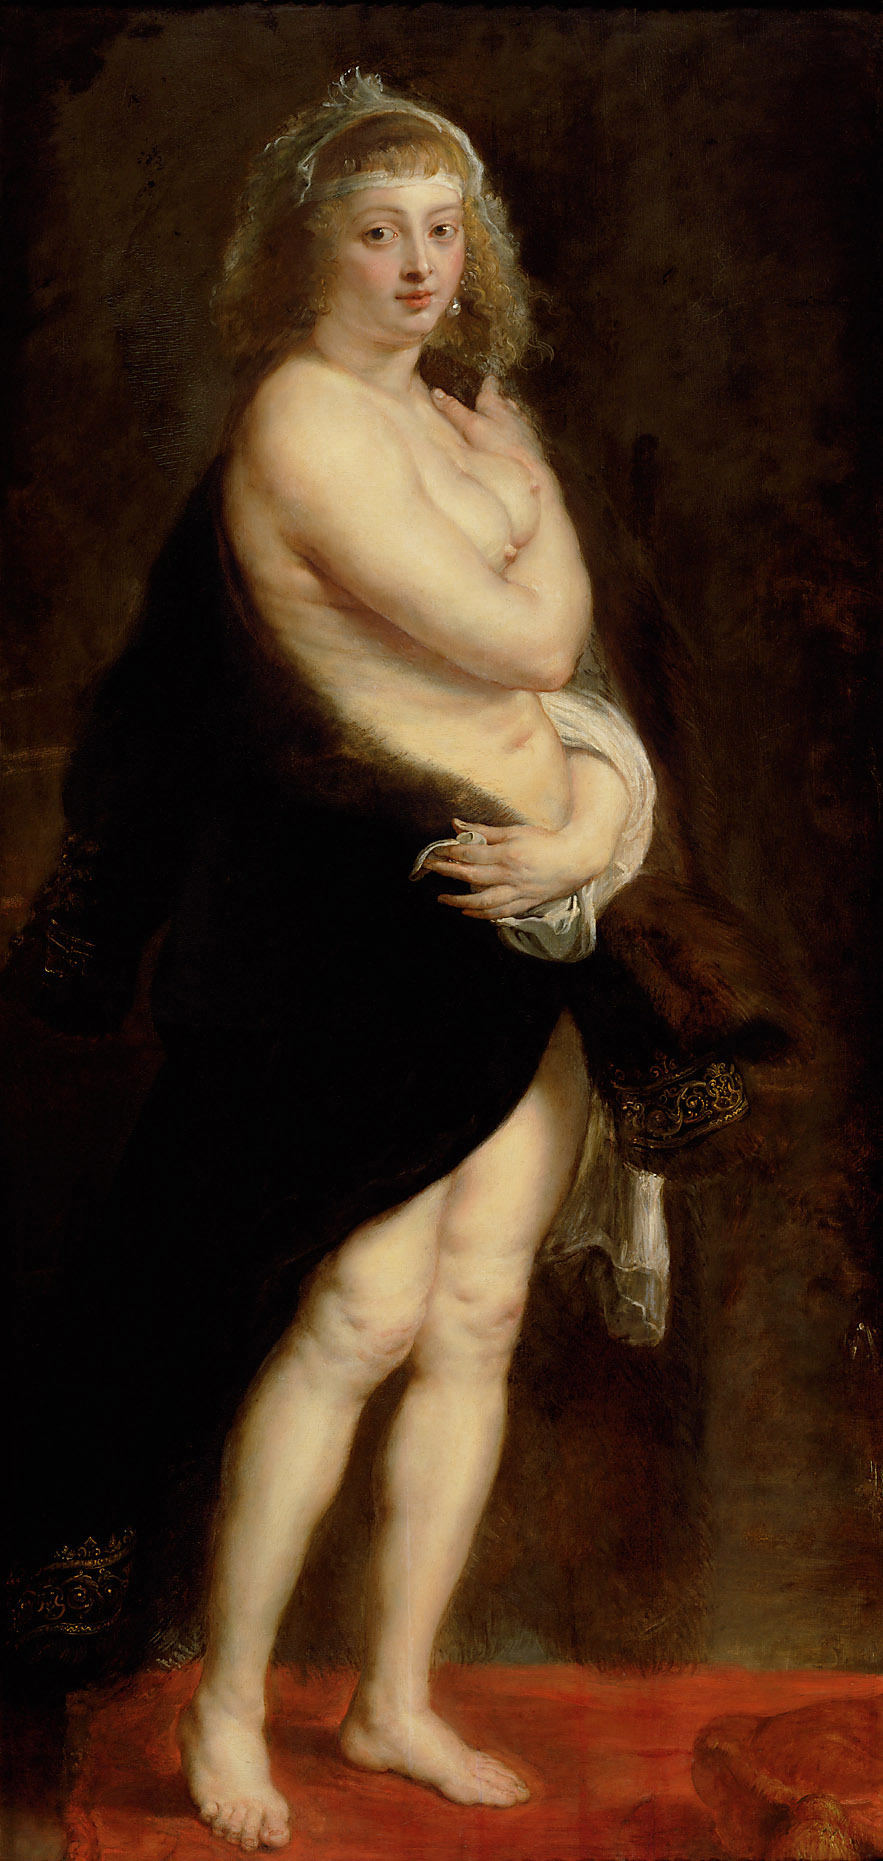 Helena Fourment ("La Fourrure") by Peter Paul Rubens - Around 1636/1638 Kunsthistorisches Museum